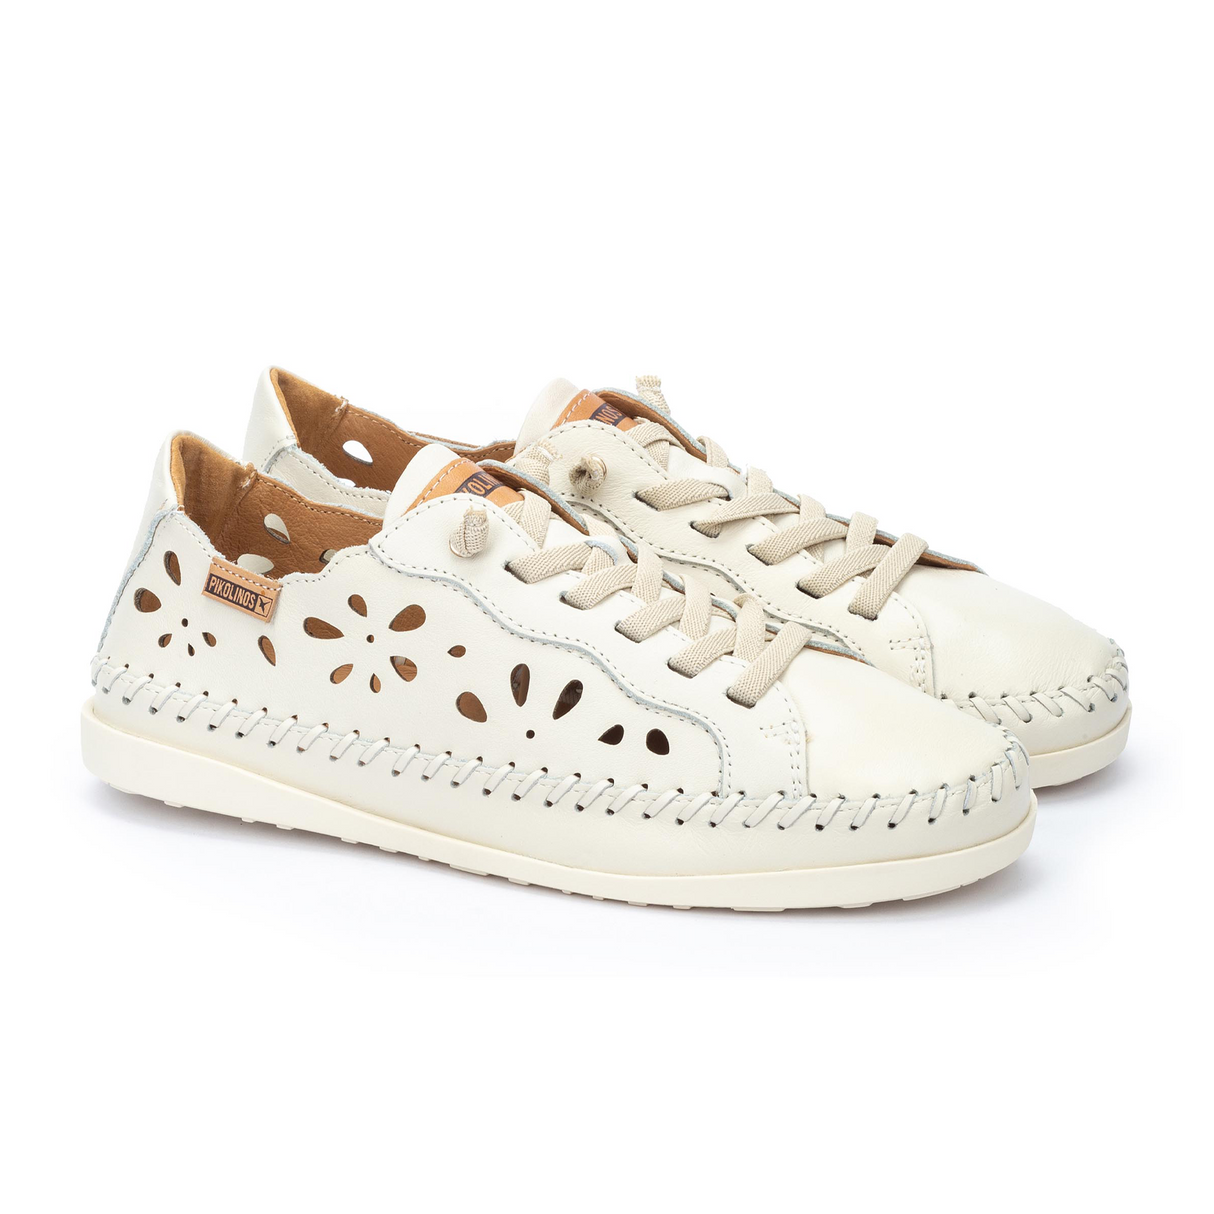 Pikolinos Soller W8B-6550 Sneaker (Women) - Nata Dress-Casual - Slip Ons - The Heel Shoe Fitters